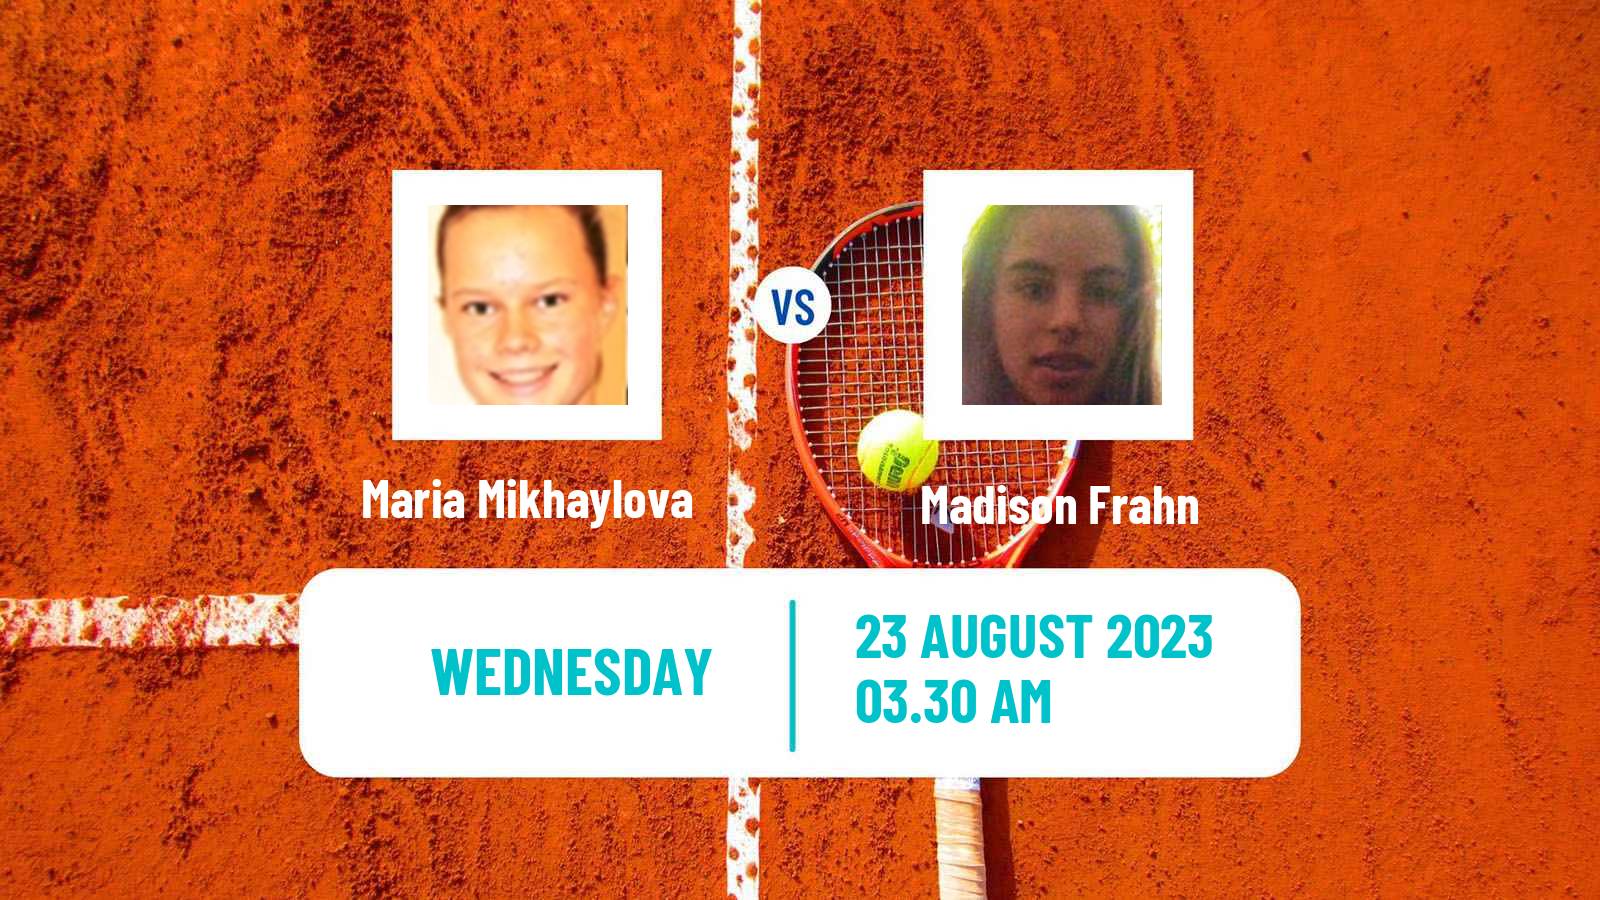 Tennis ITF W15 Baku Women Maria Mikhaylova - Madison Frahn